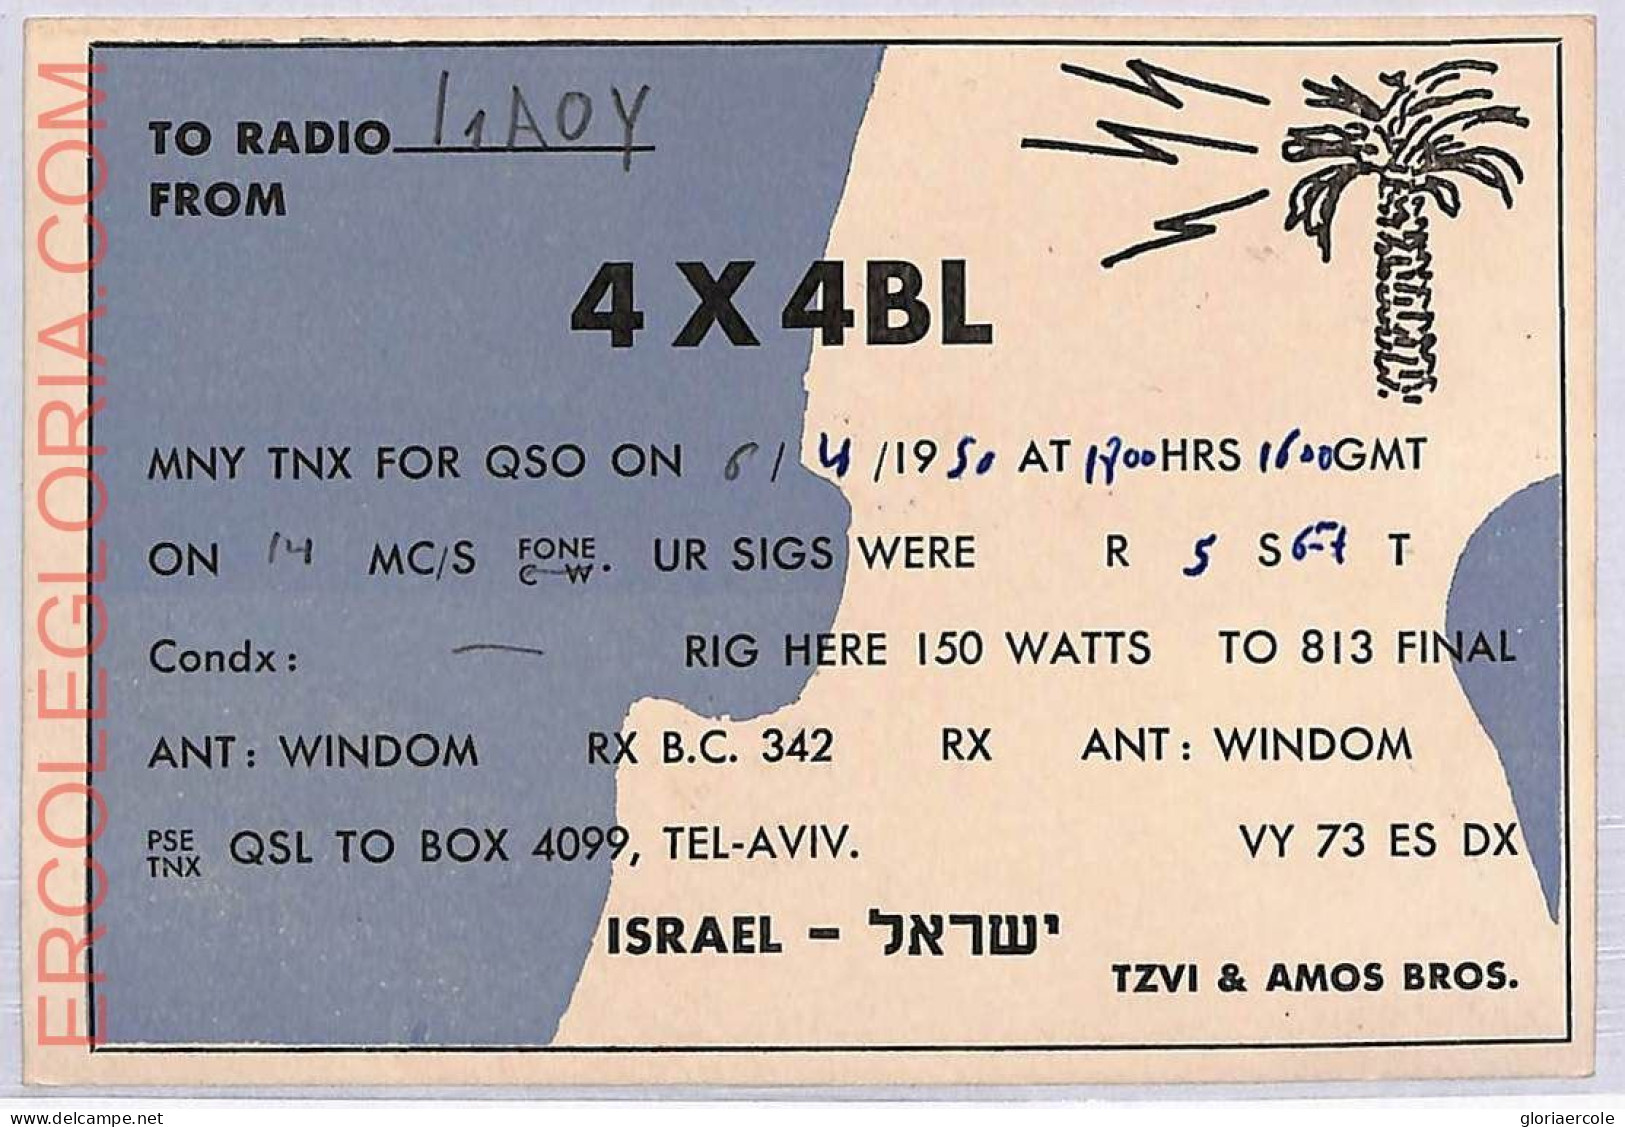 Ad9199 - ISRAEL - RADIO FREQUENCY CARD - 1950 - Radio